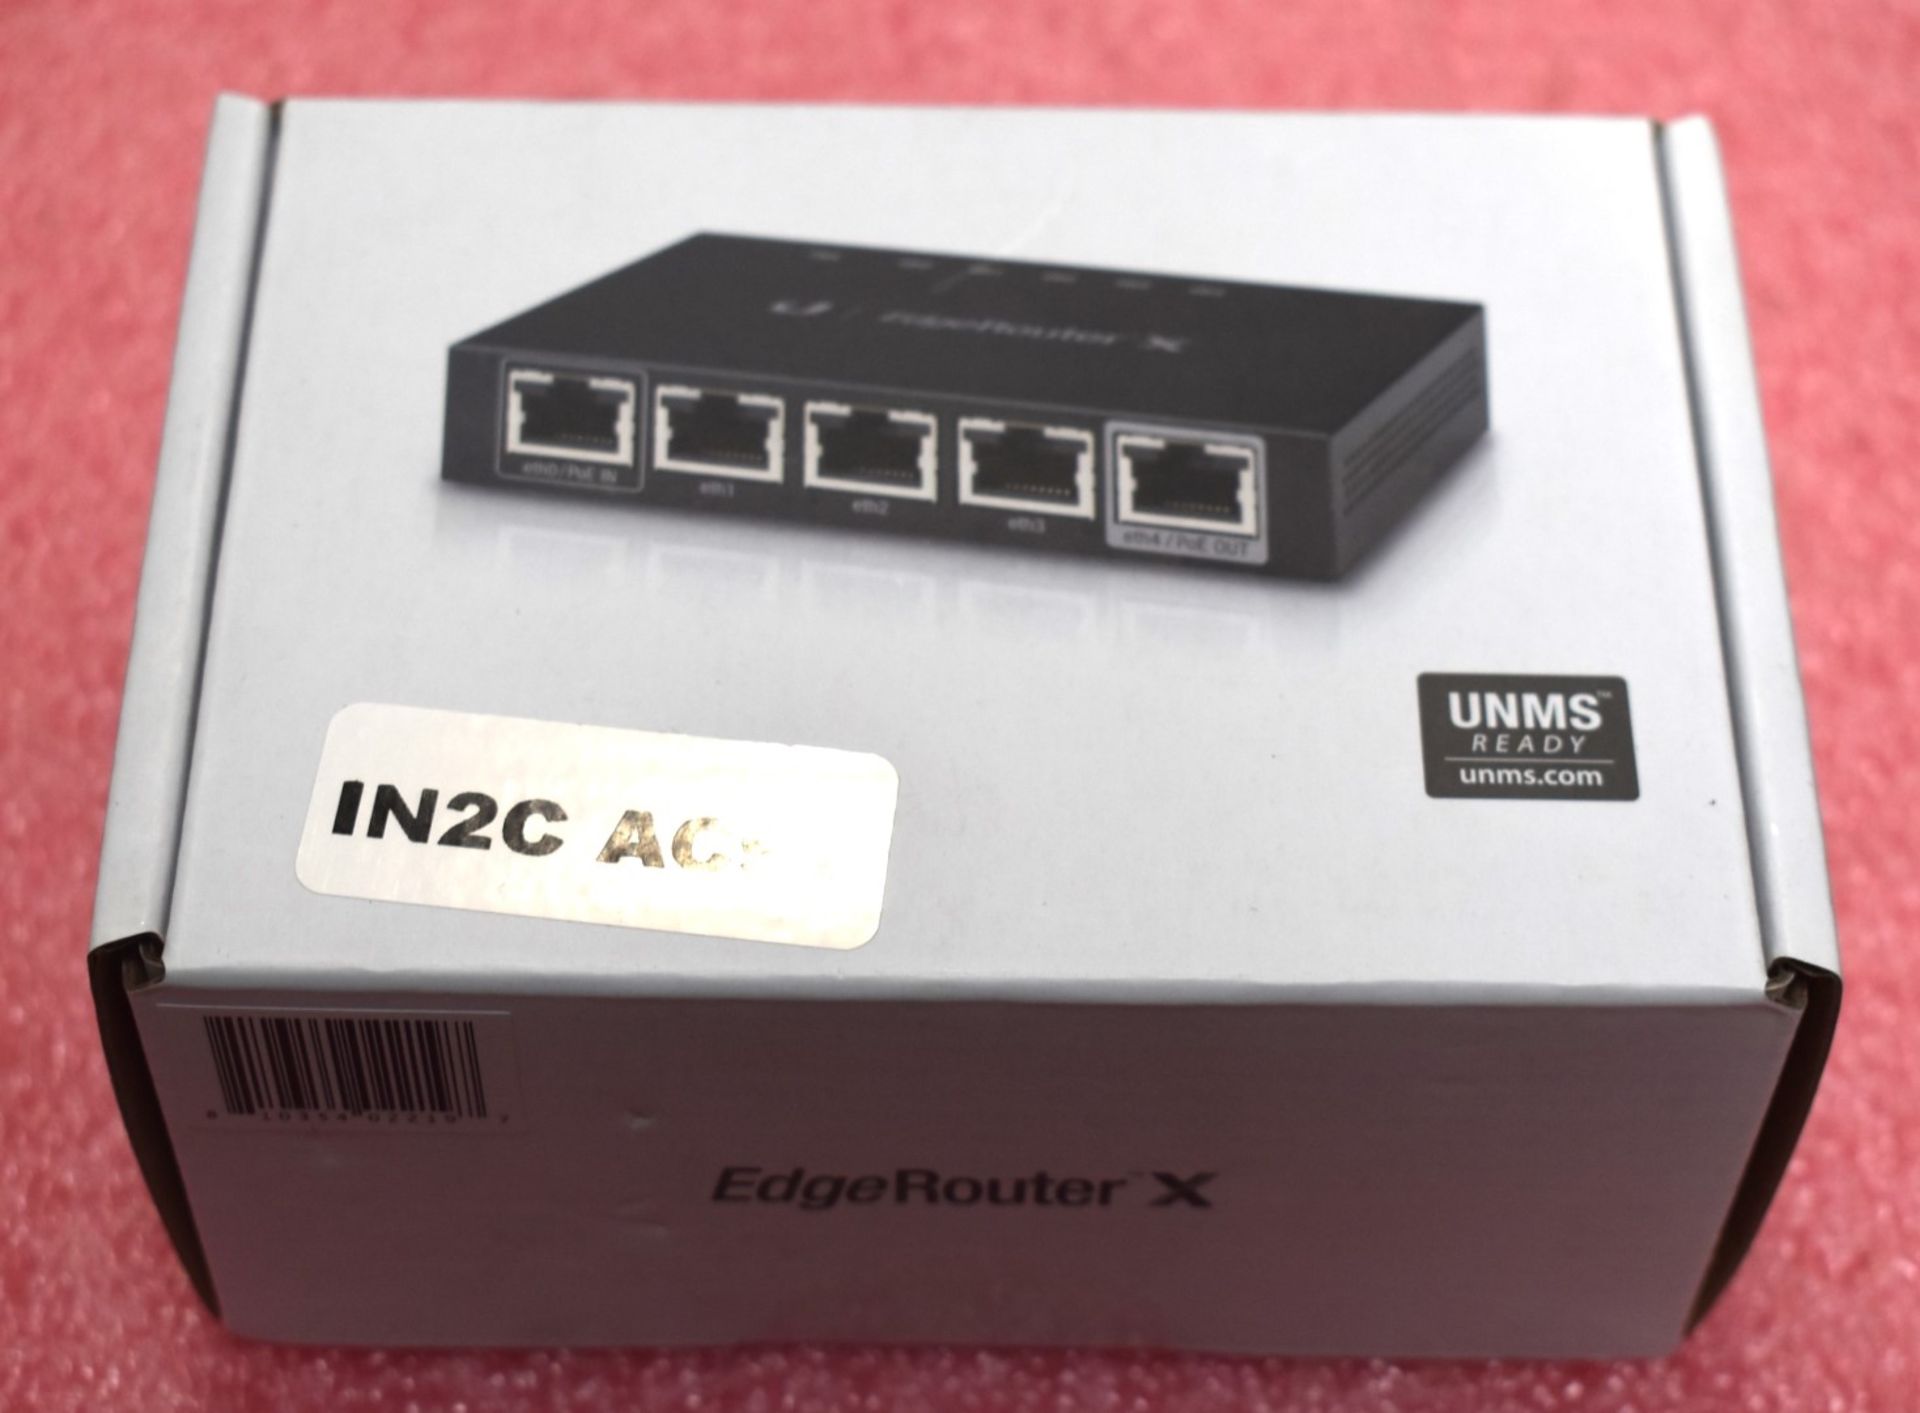 1 x UBIQUITI ER-X Networks EdgeRouter X 5 Ports Gigabit LAN/WAN Router - New Boxed Stock - Image 2 of 5